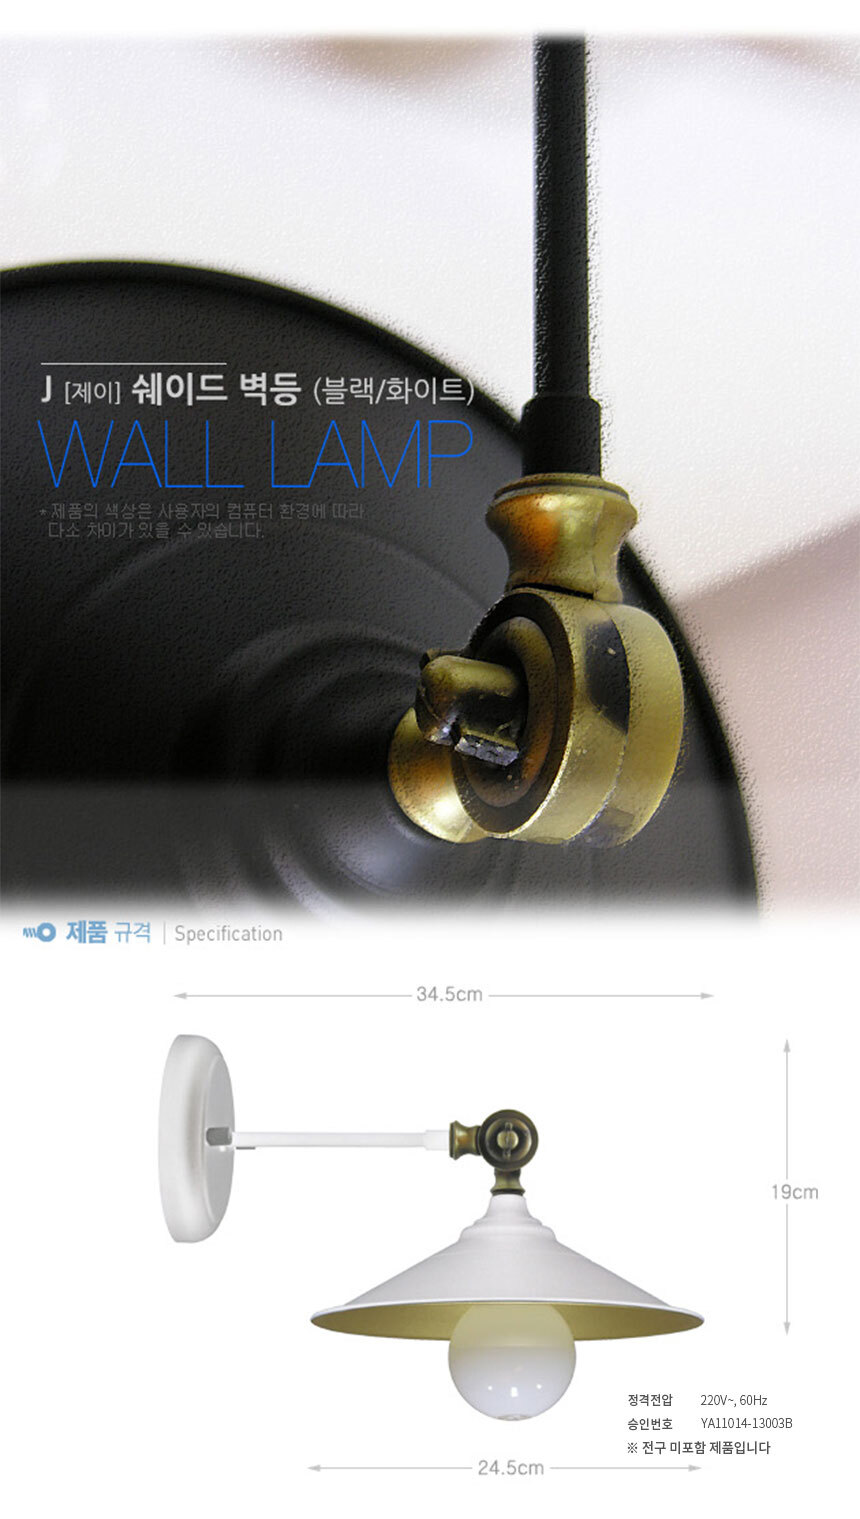 j 제이 쉐이드 벽등 블랙 화이트 wall lamp
제품 규격 D24.5cm * W34.5cm * H19cm
정격전압 220V 60hz
승인번호 ya11014-13003B
